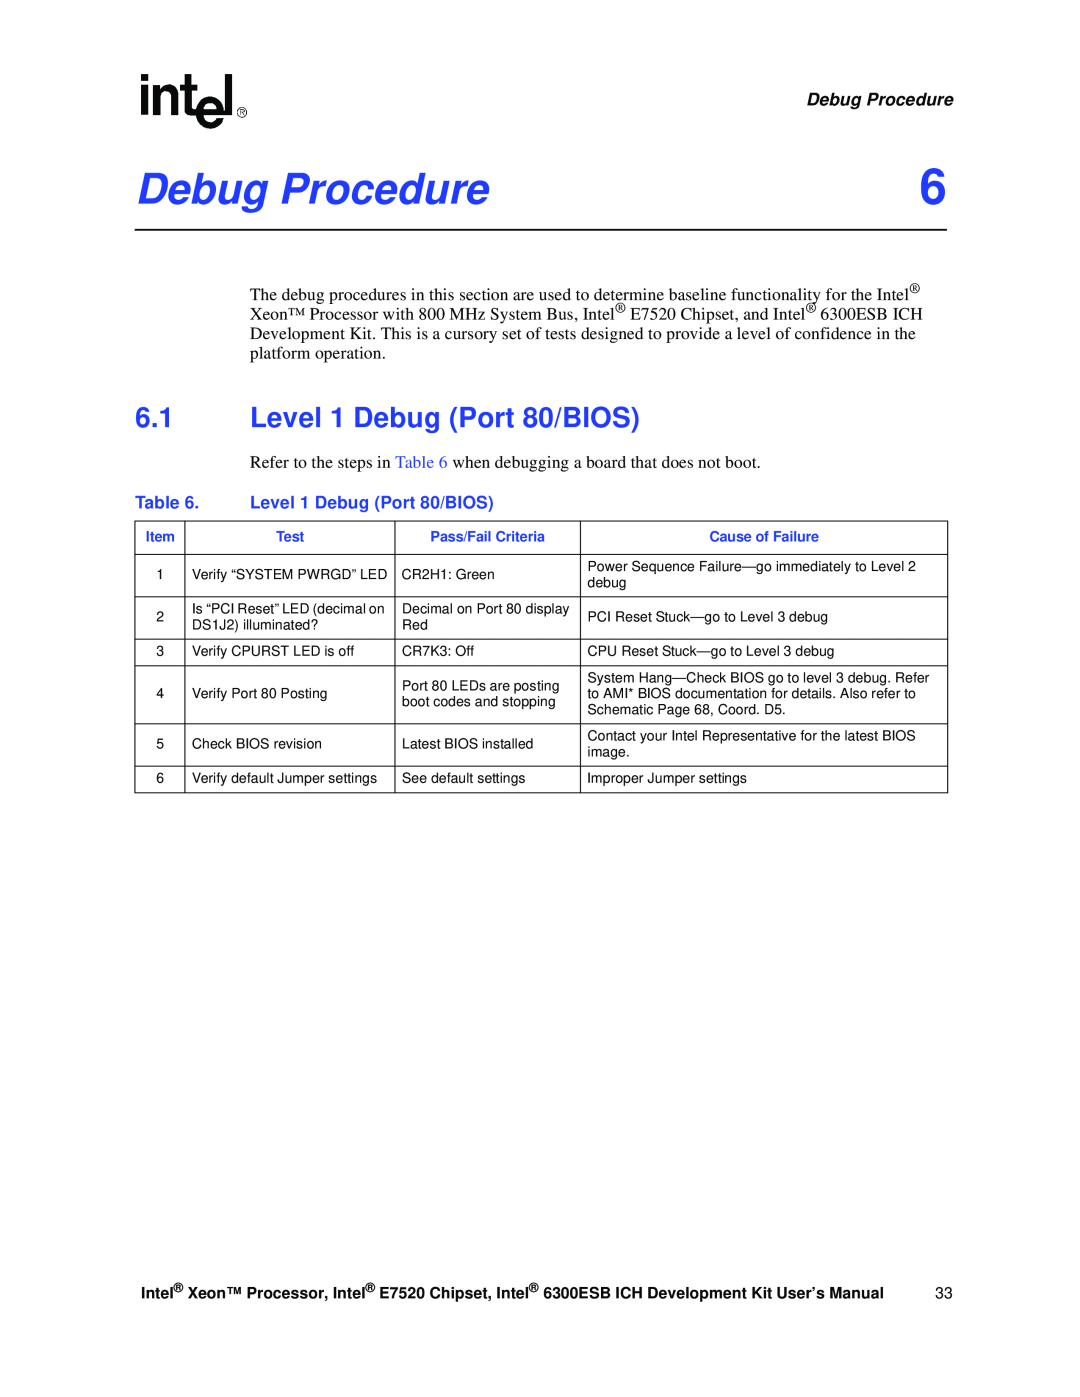 Intel 6300ESB ICH, Xeon user manual Debug Procedure, Level 1 Debug Port 80/BIOS 